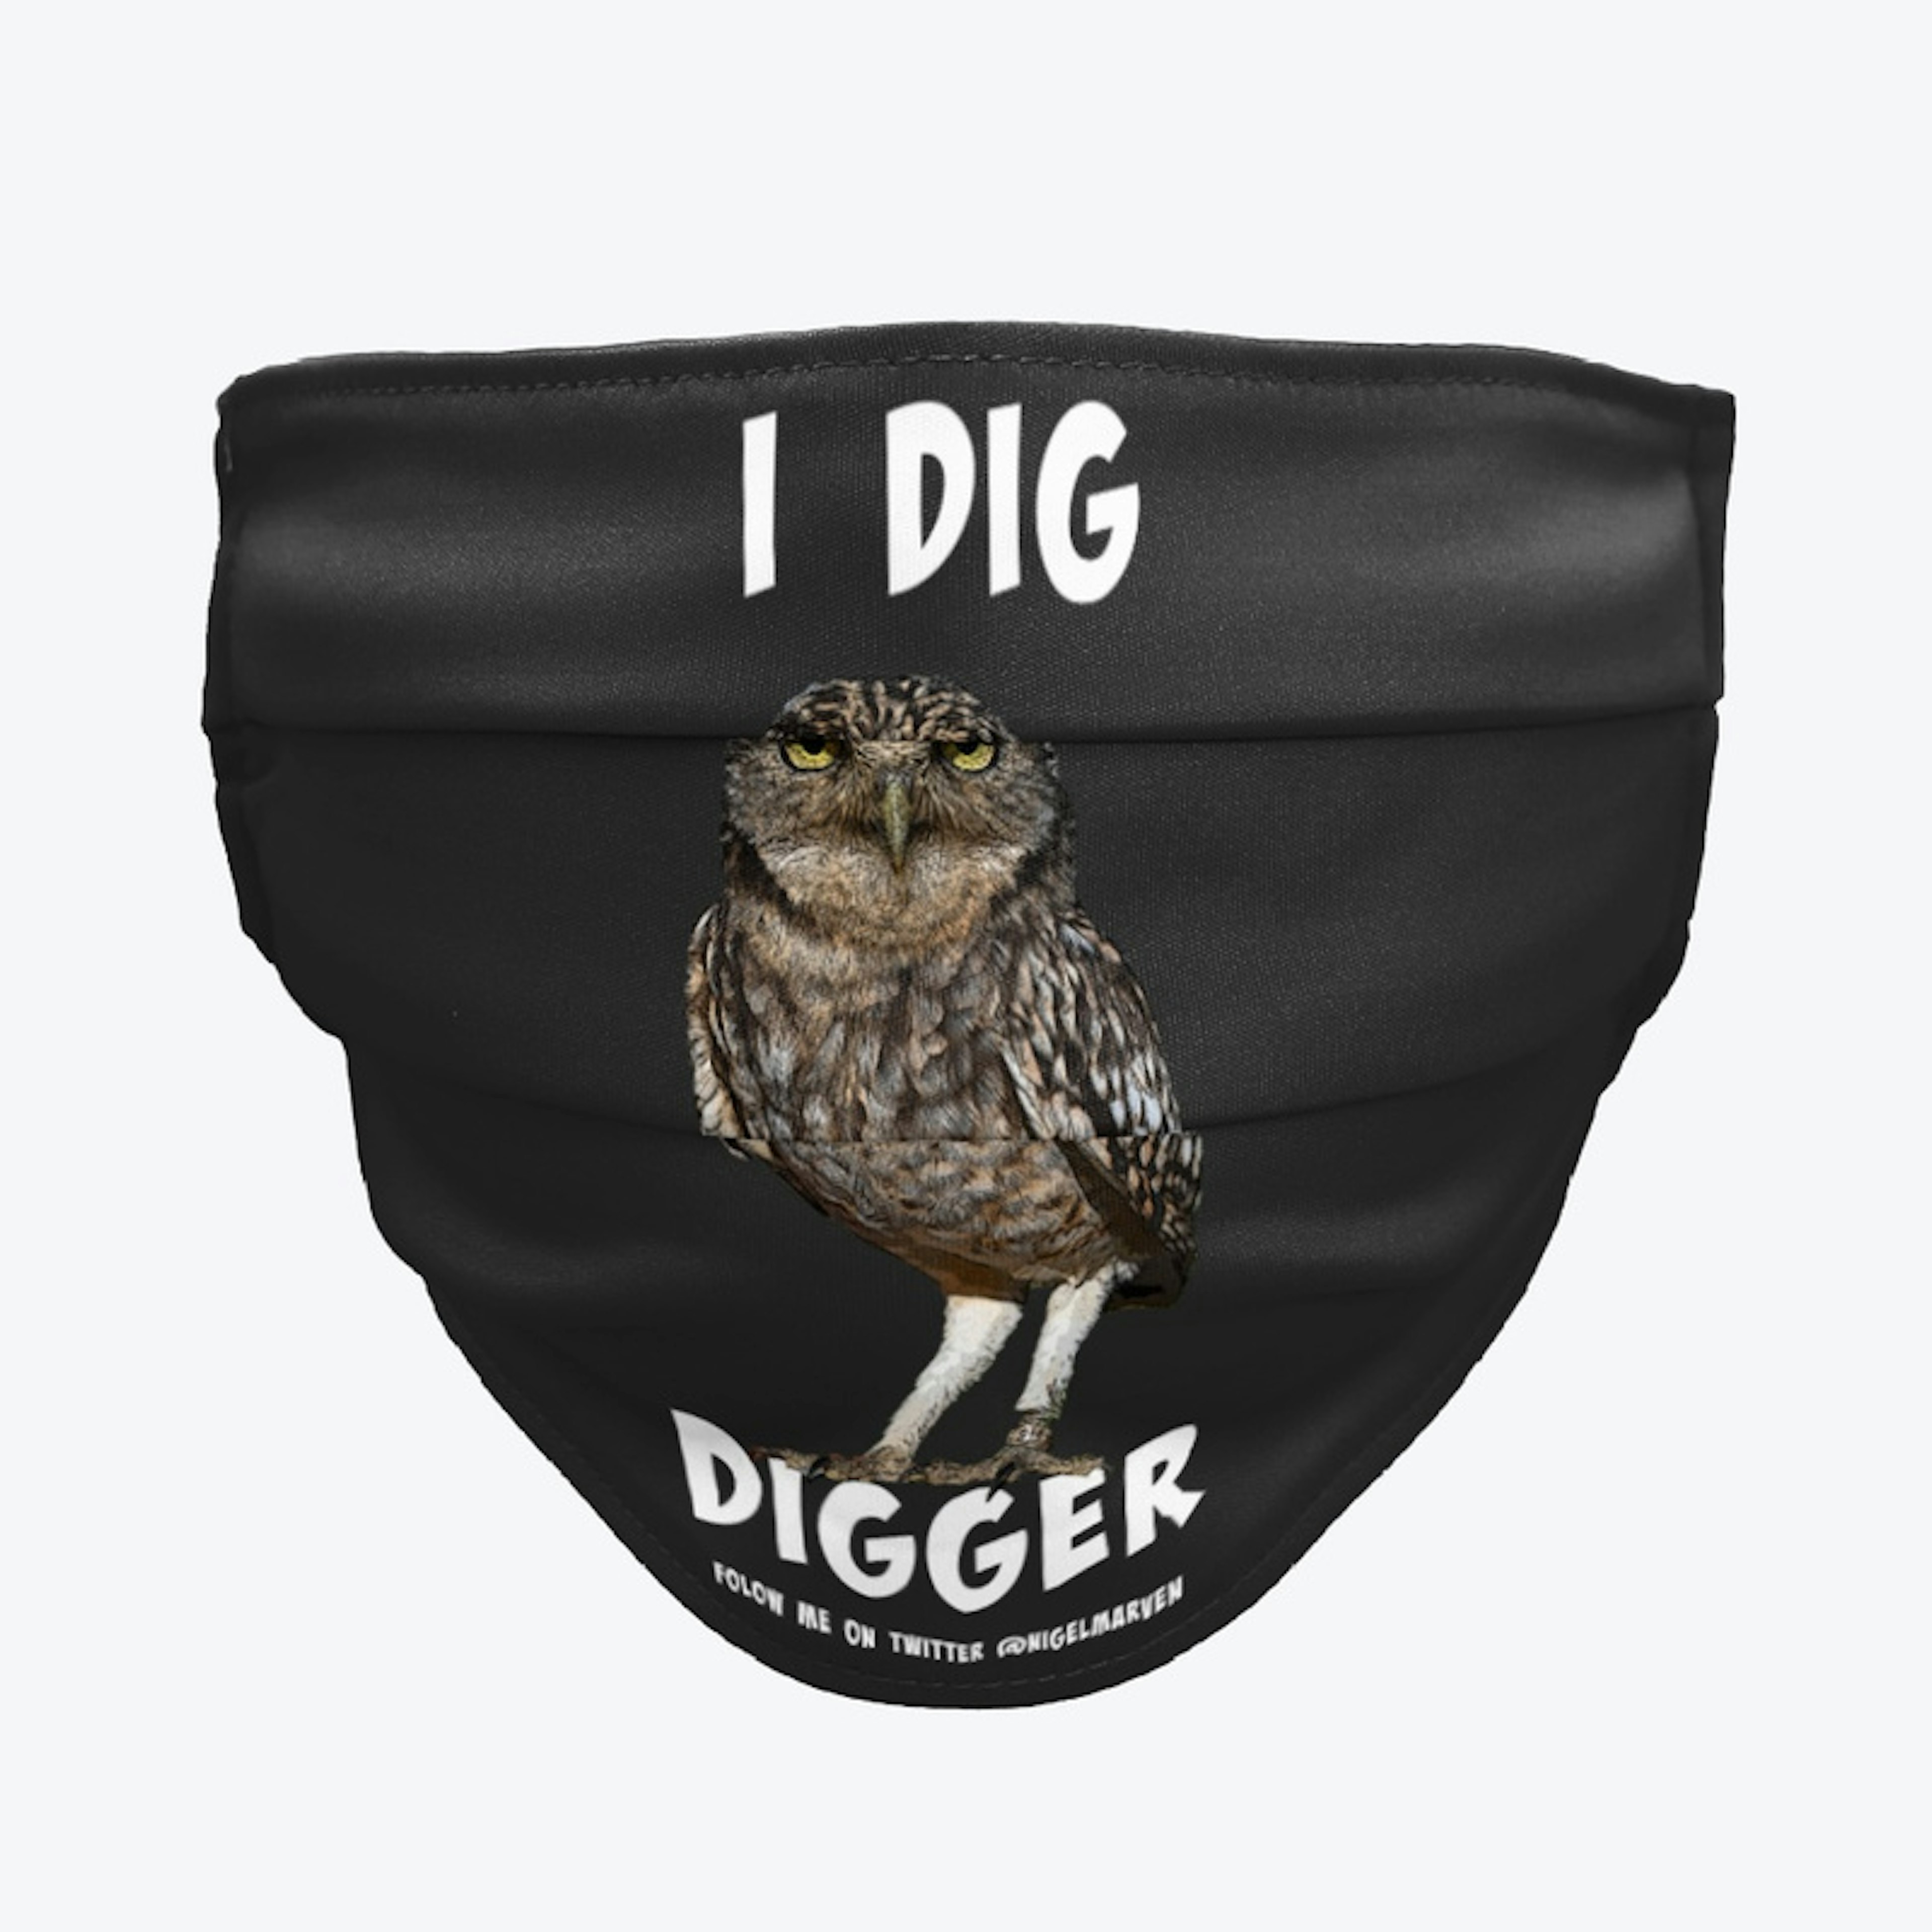 Digger Designs